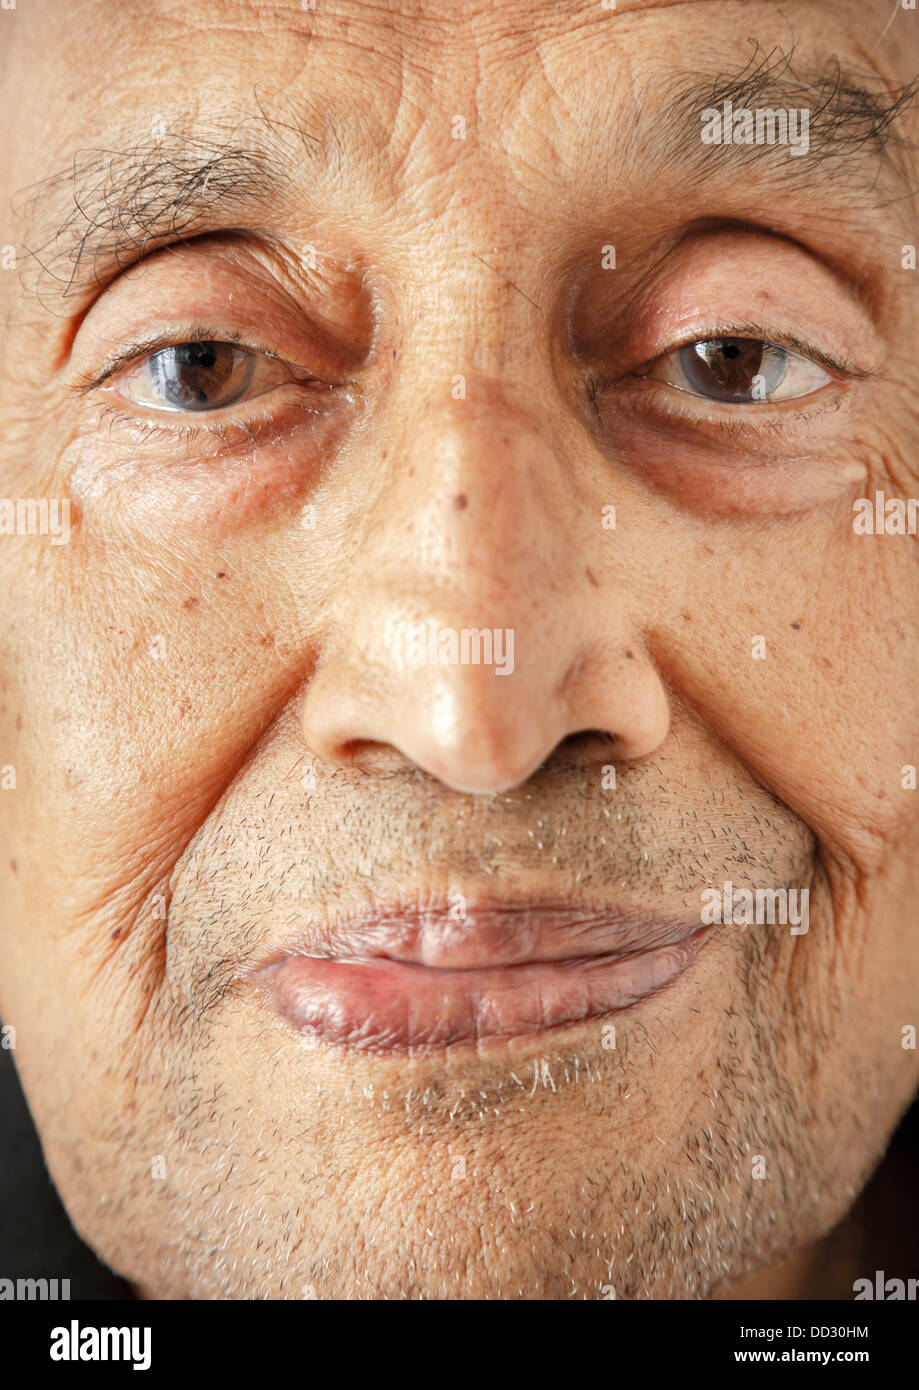 Face of an old Asian man close up Stock Photo